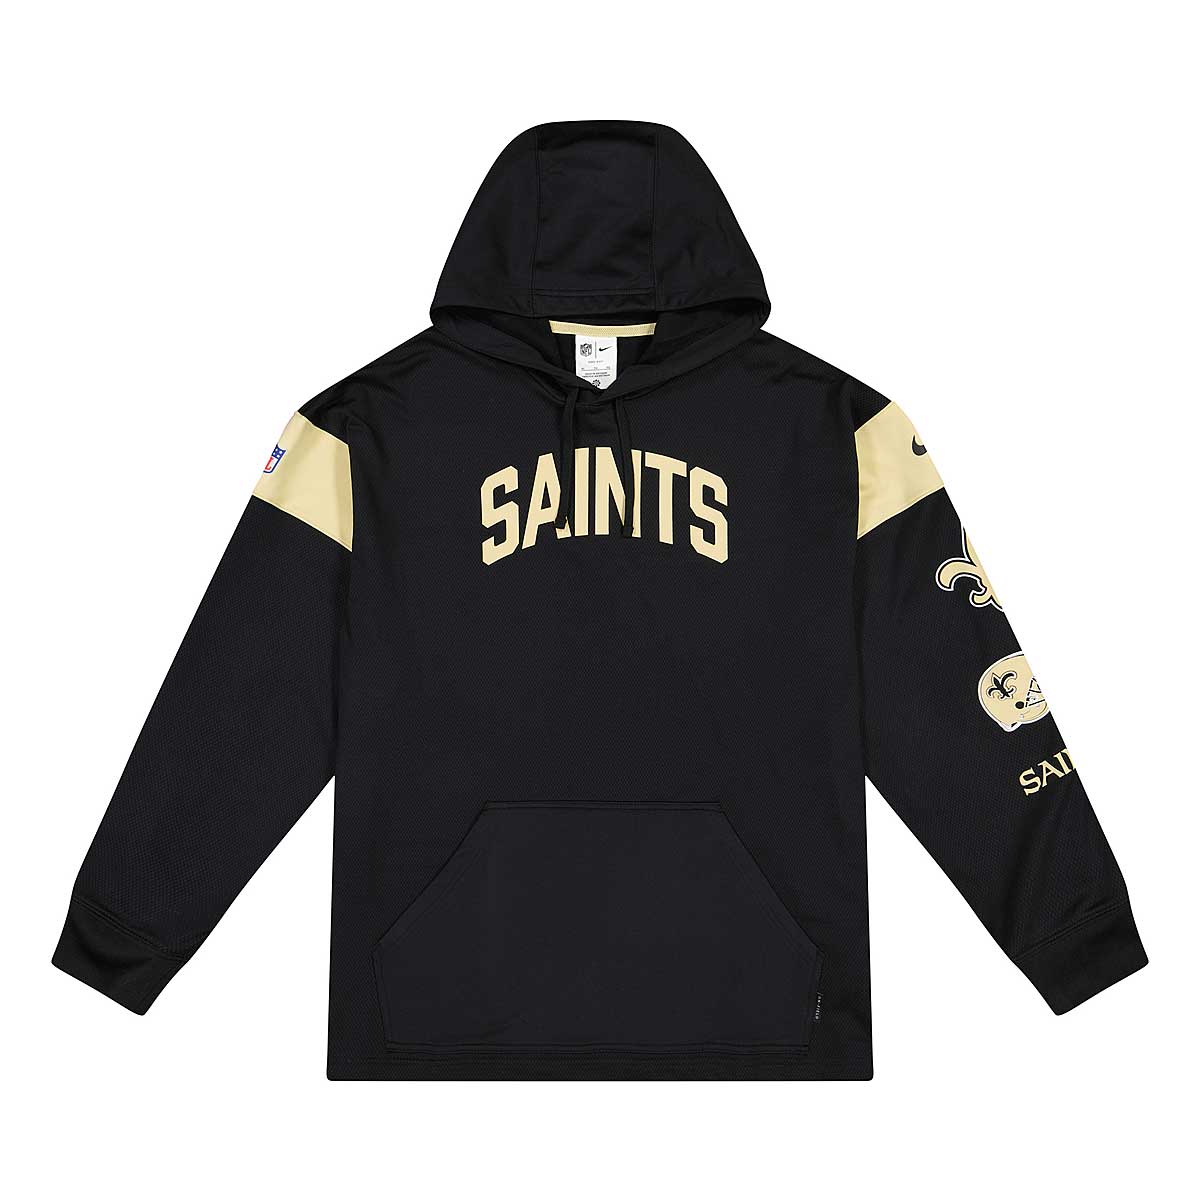 Nike Nfl New Orleans Saints Patch Hoody, Black-Team Gold